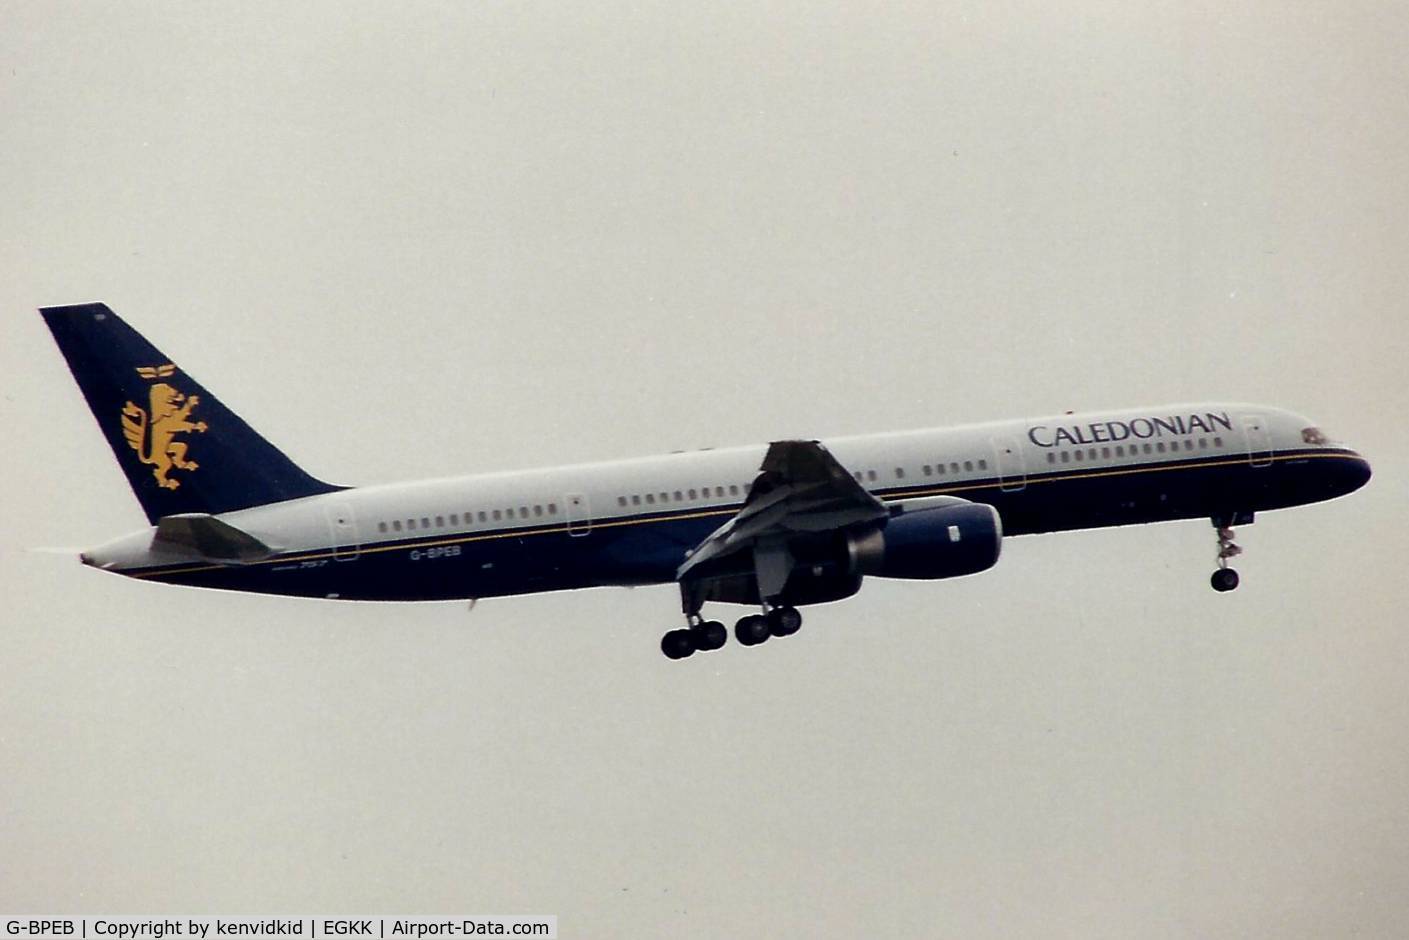 G-BPEB, 1989 Boeing 757-236 C/N 24371, At Gatwick circa 1989.